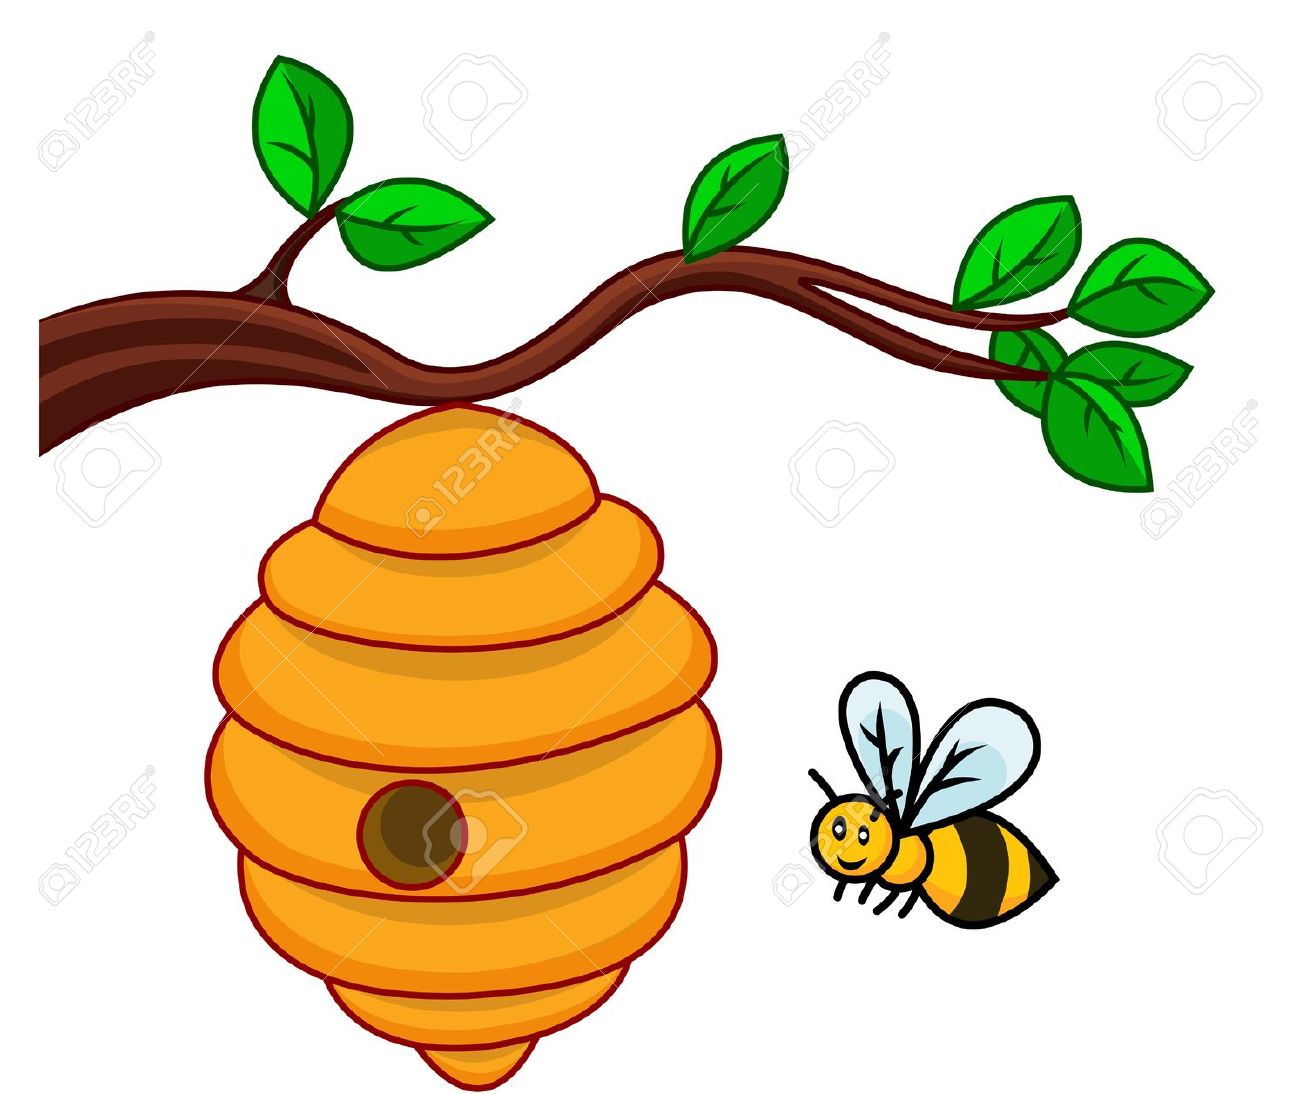 beehive: illustration of .